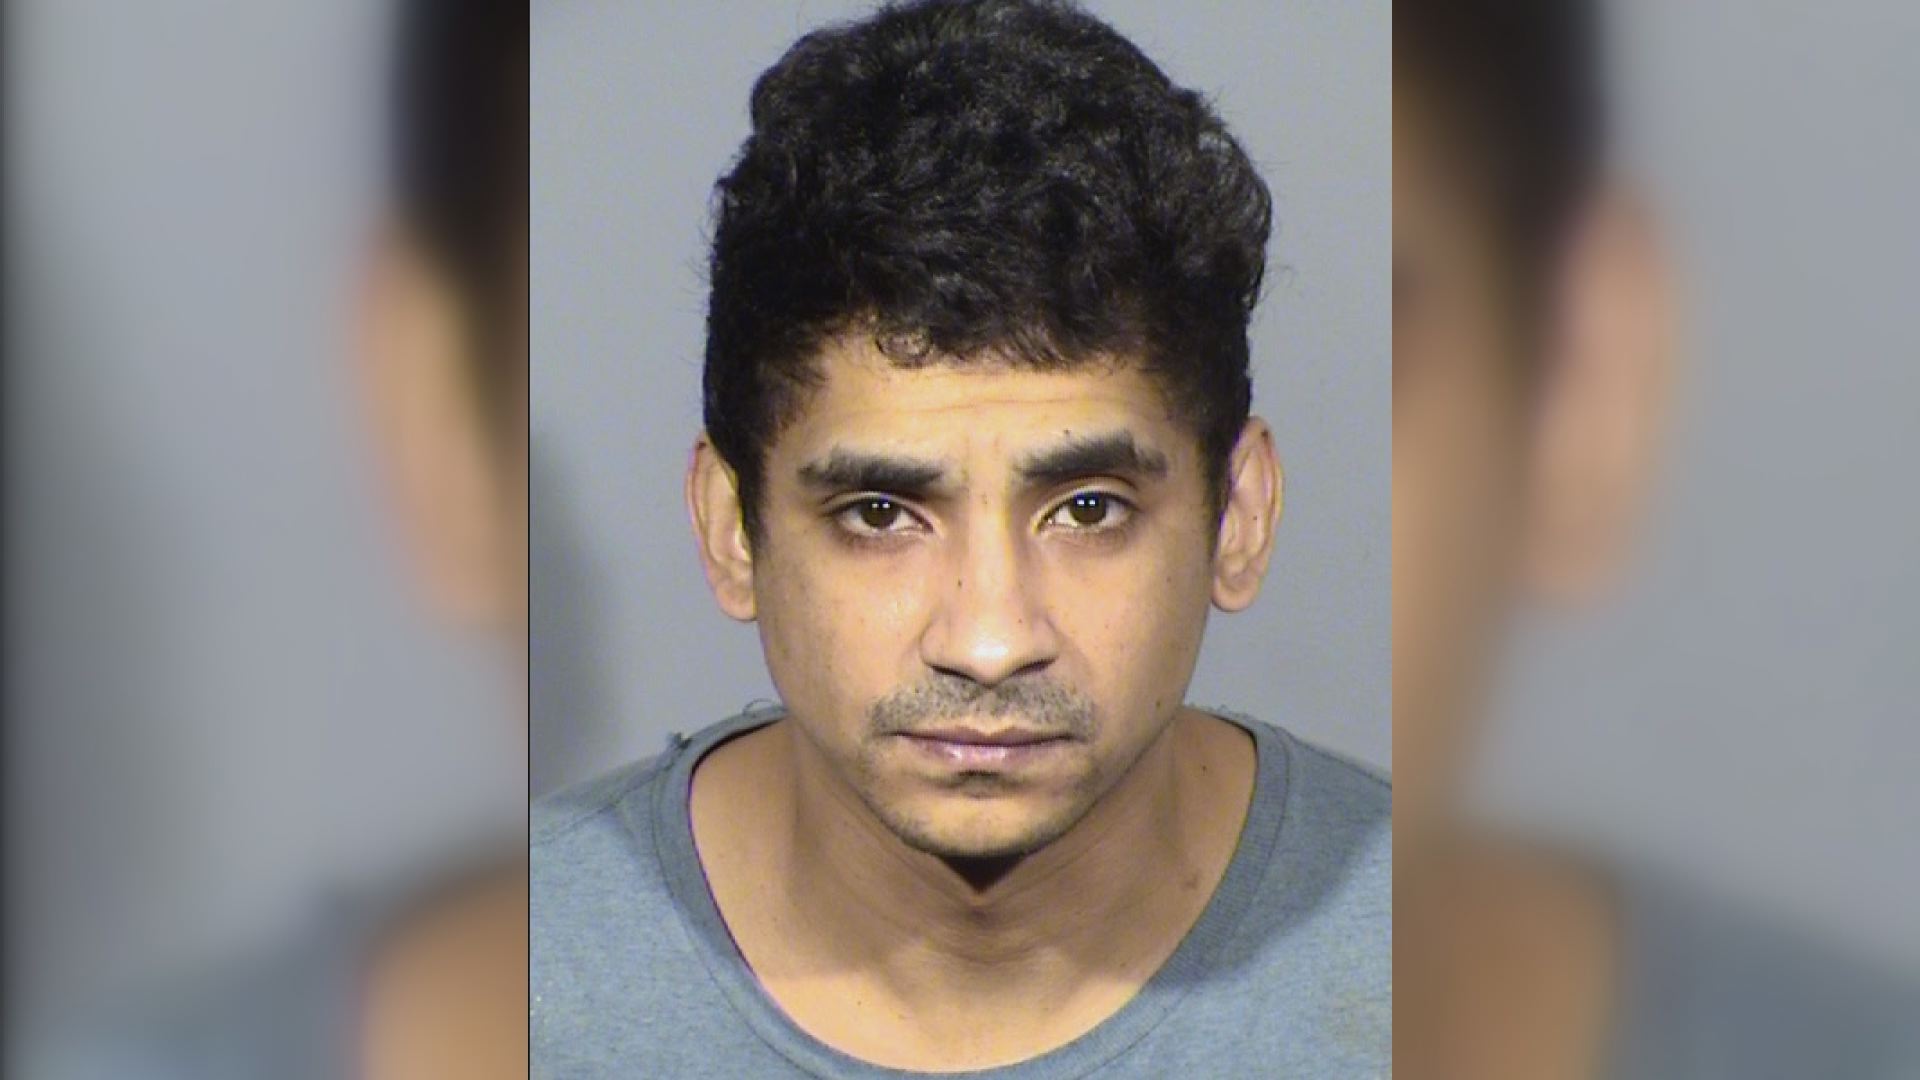 Childs body found in Centreville garage connected to sex trafficking arrest in Las Vegas ksdk image